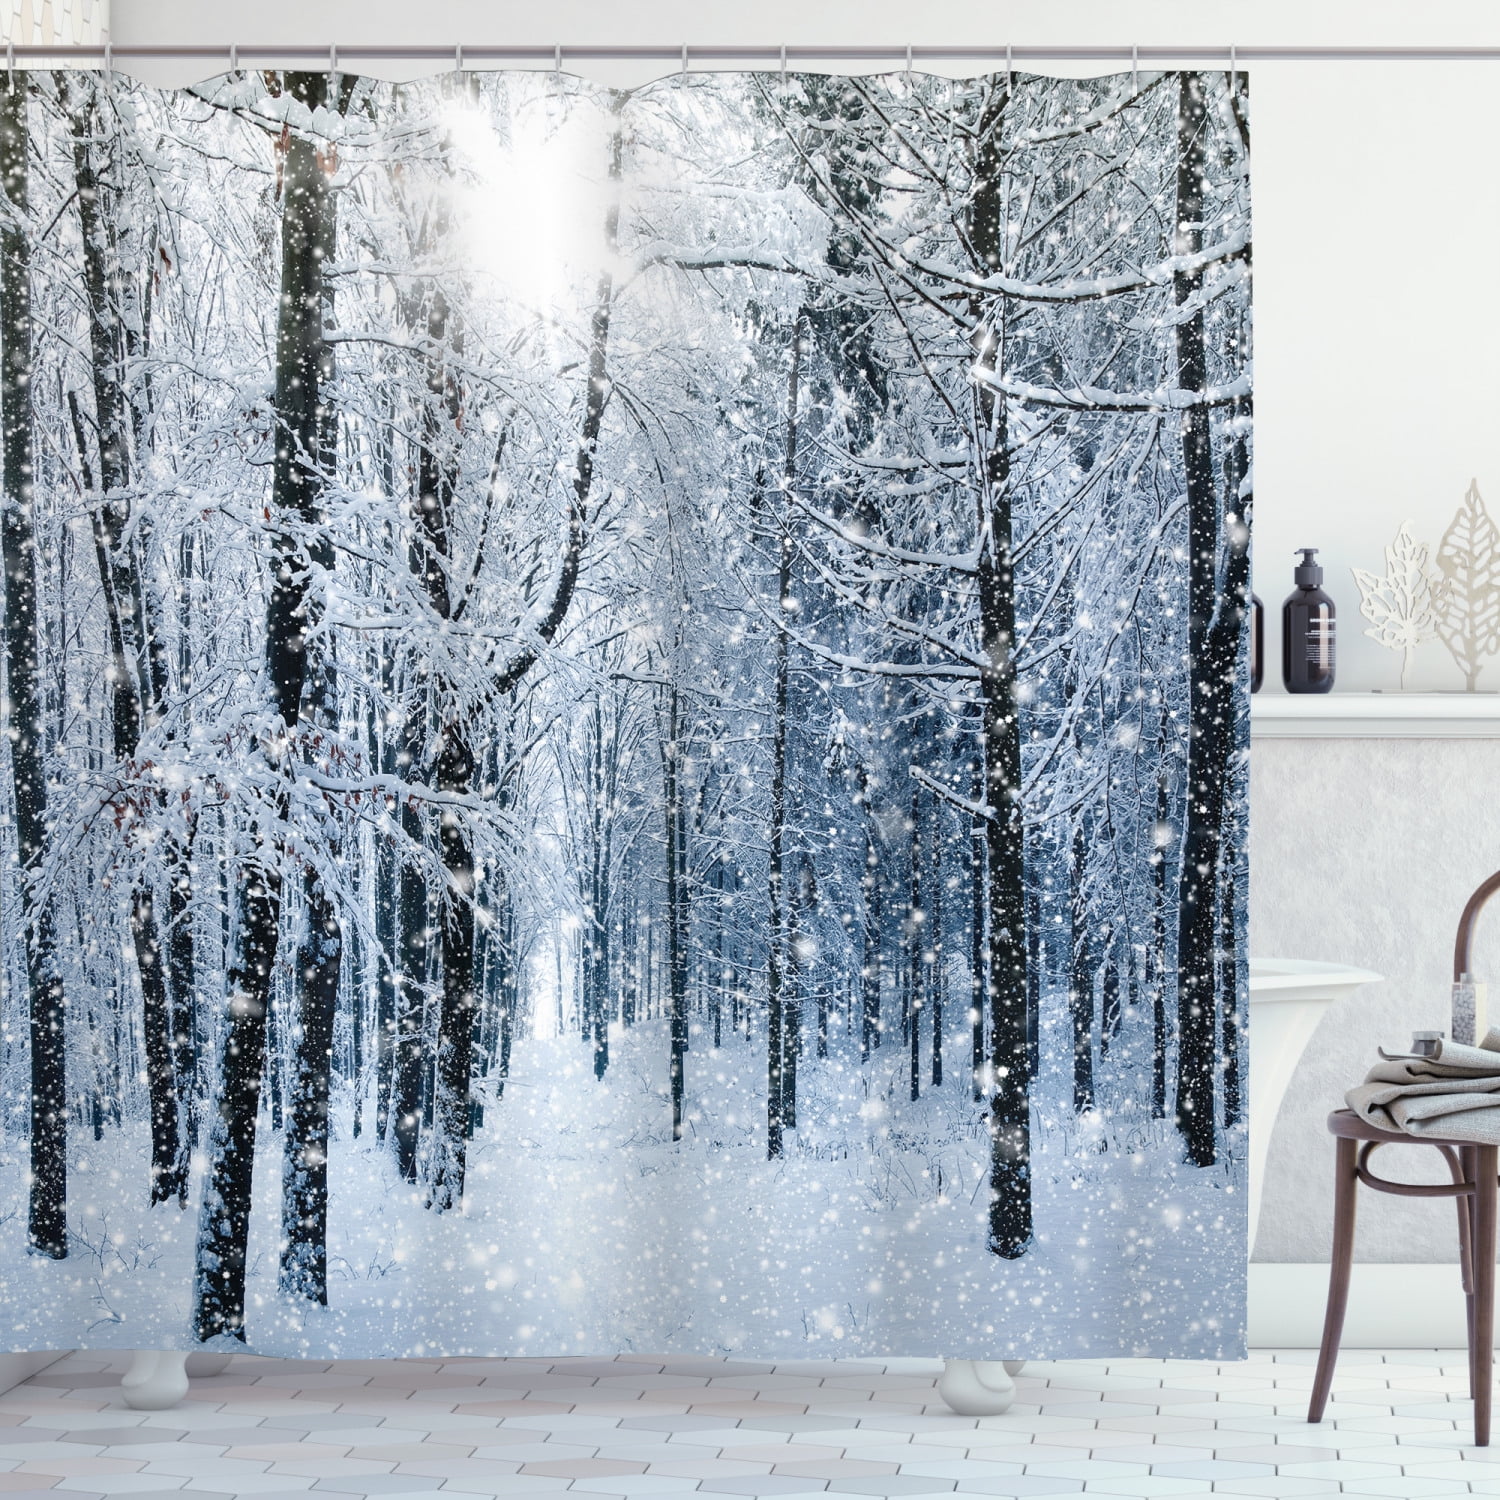 Christmas Winter Snow Snowy Tree Cardinals Shower Curtain Set Bathroom Decor 72"